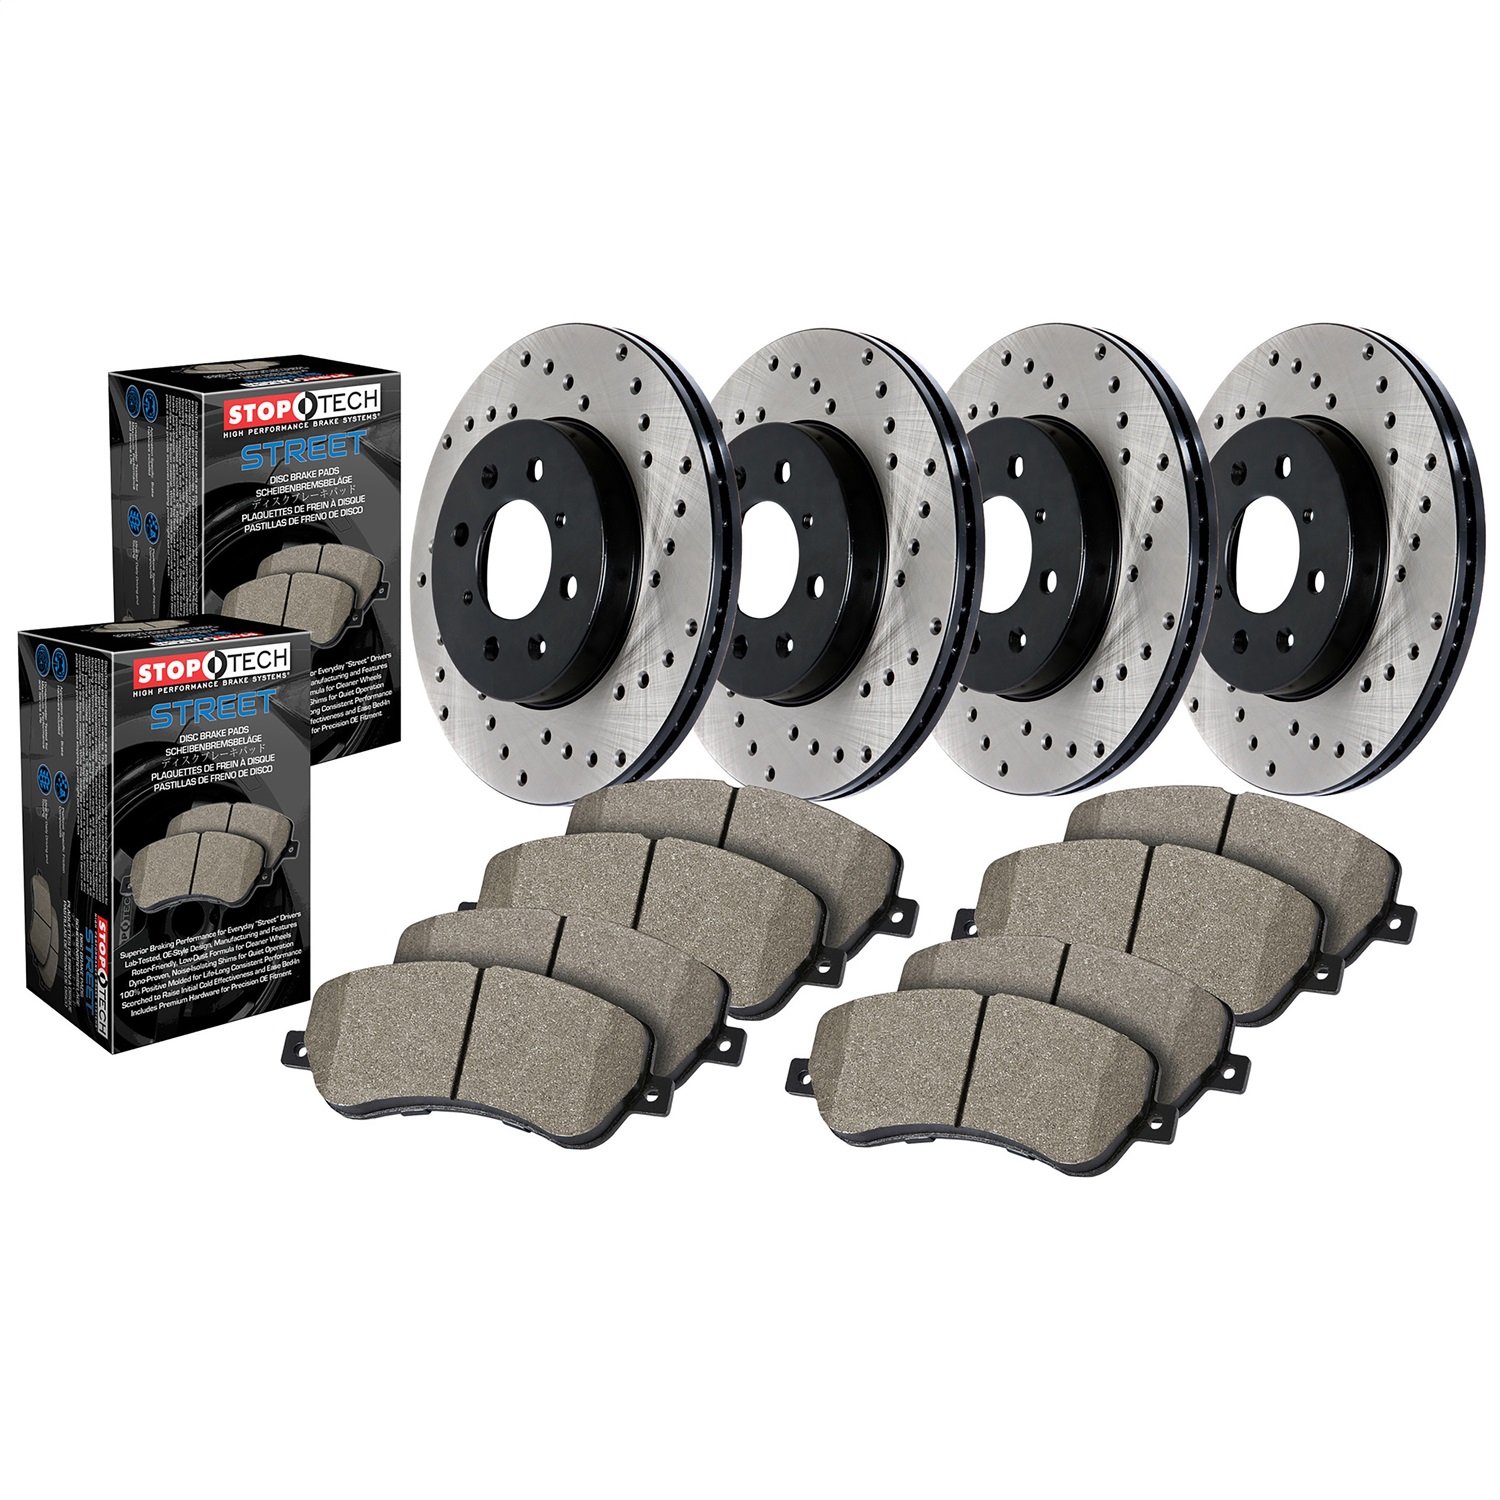 StopTech 936.40043 Street - 4 Wheel Disc Brake Kit w/Cross-Drilled Rotor